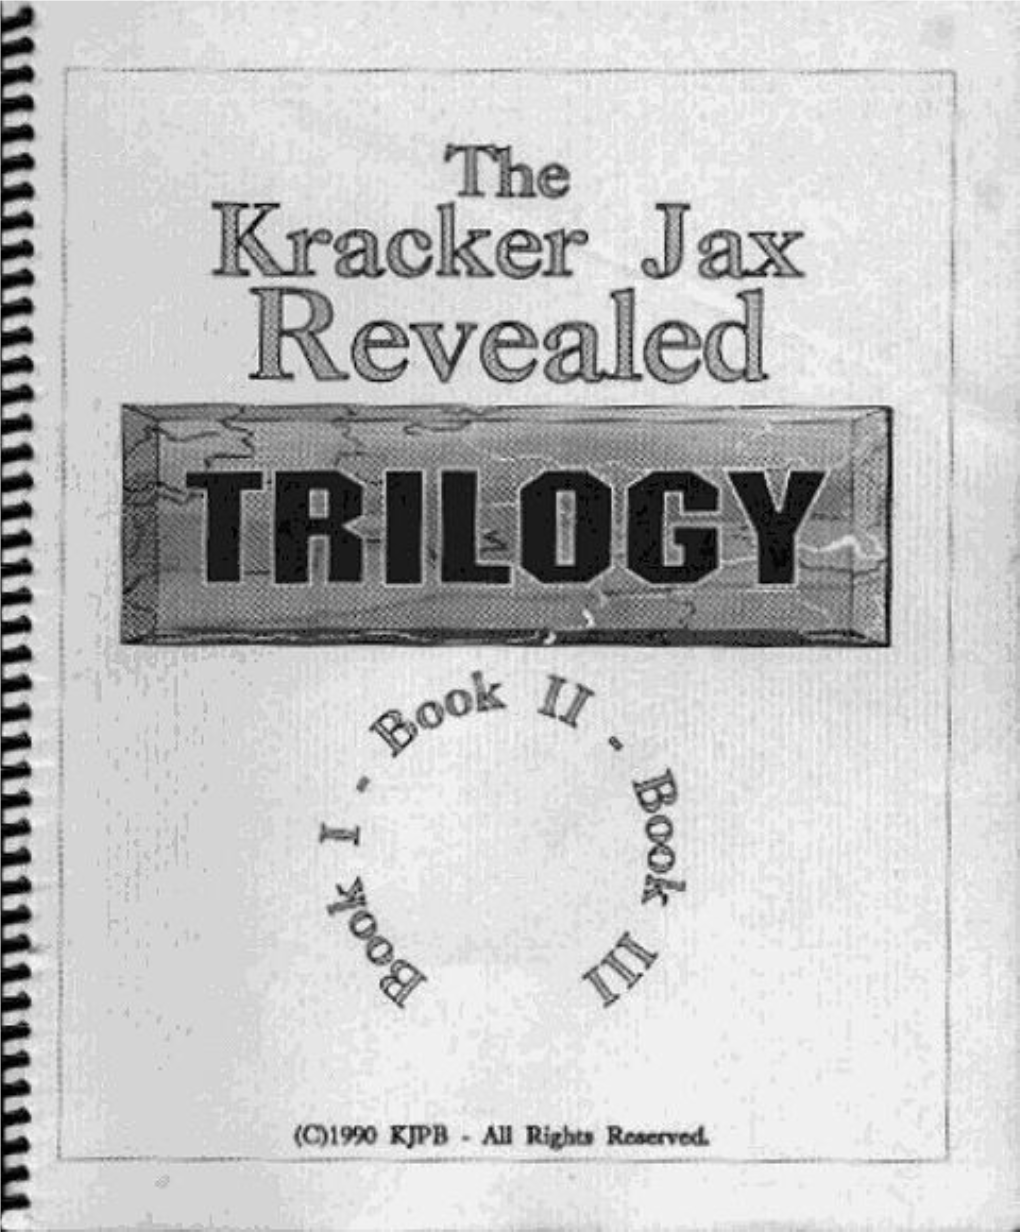 The Kracker Jax Revealed Trilogy